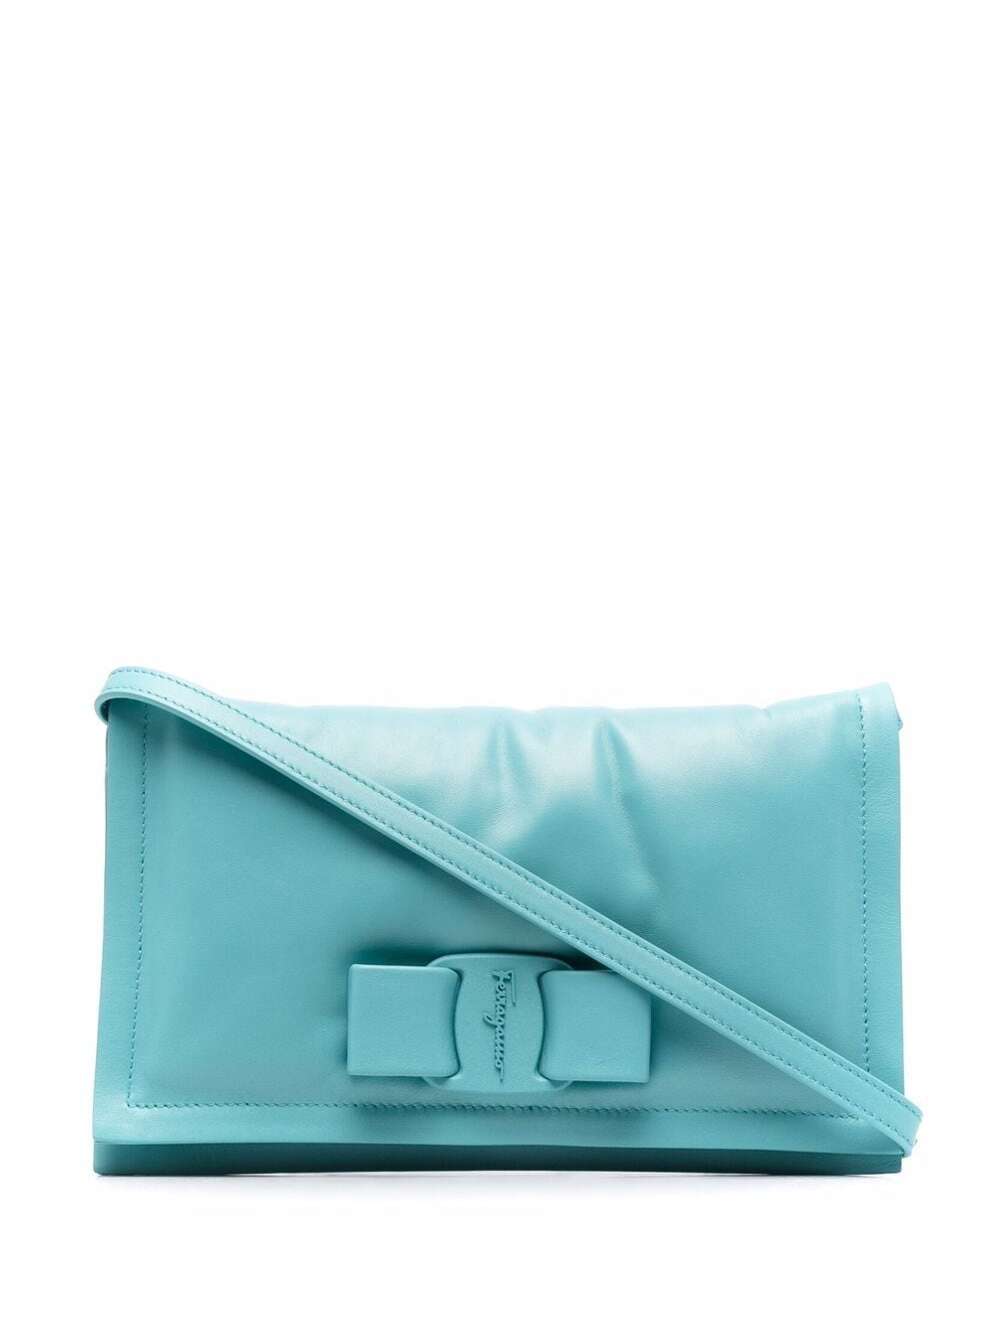 Salvatore Ferragamo Womans Viva Light Blue Leather Crossbody Bag With Logo